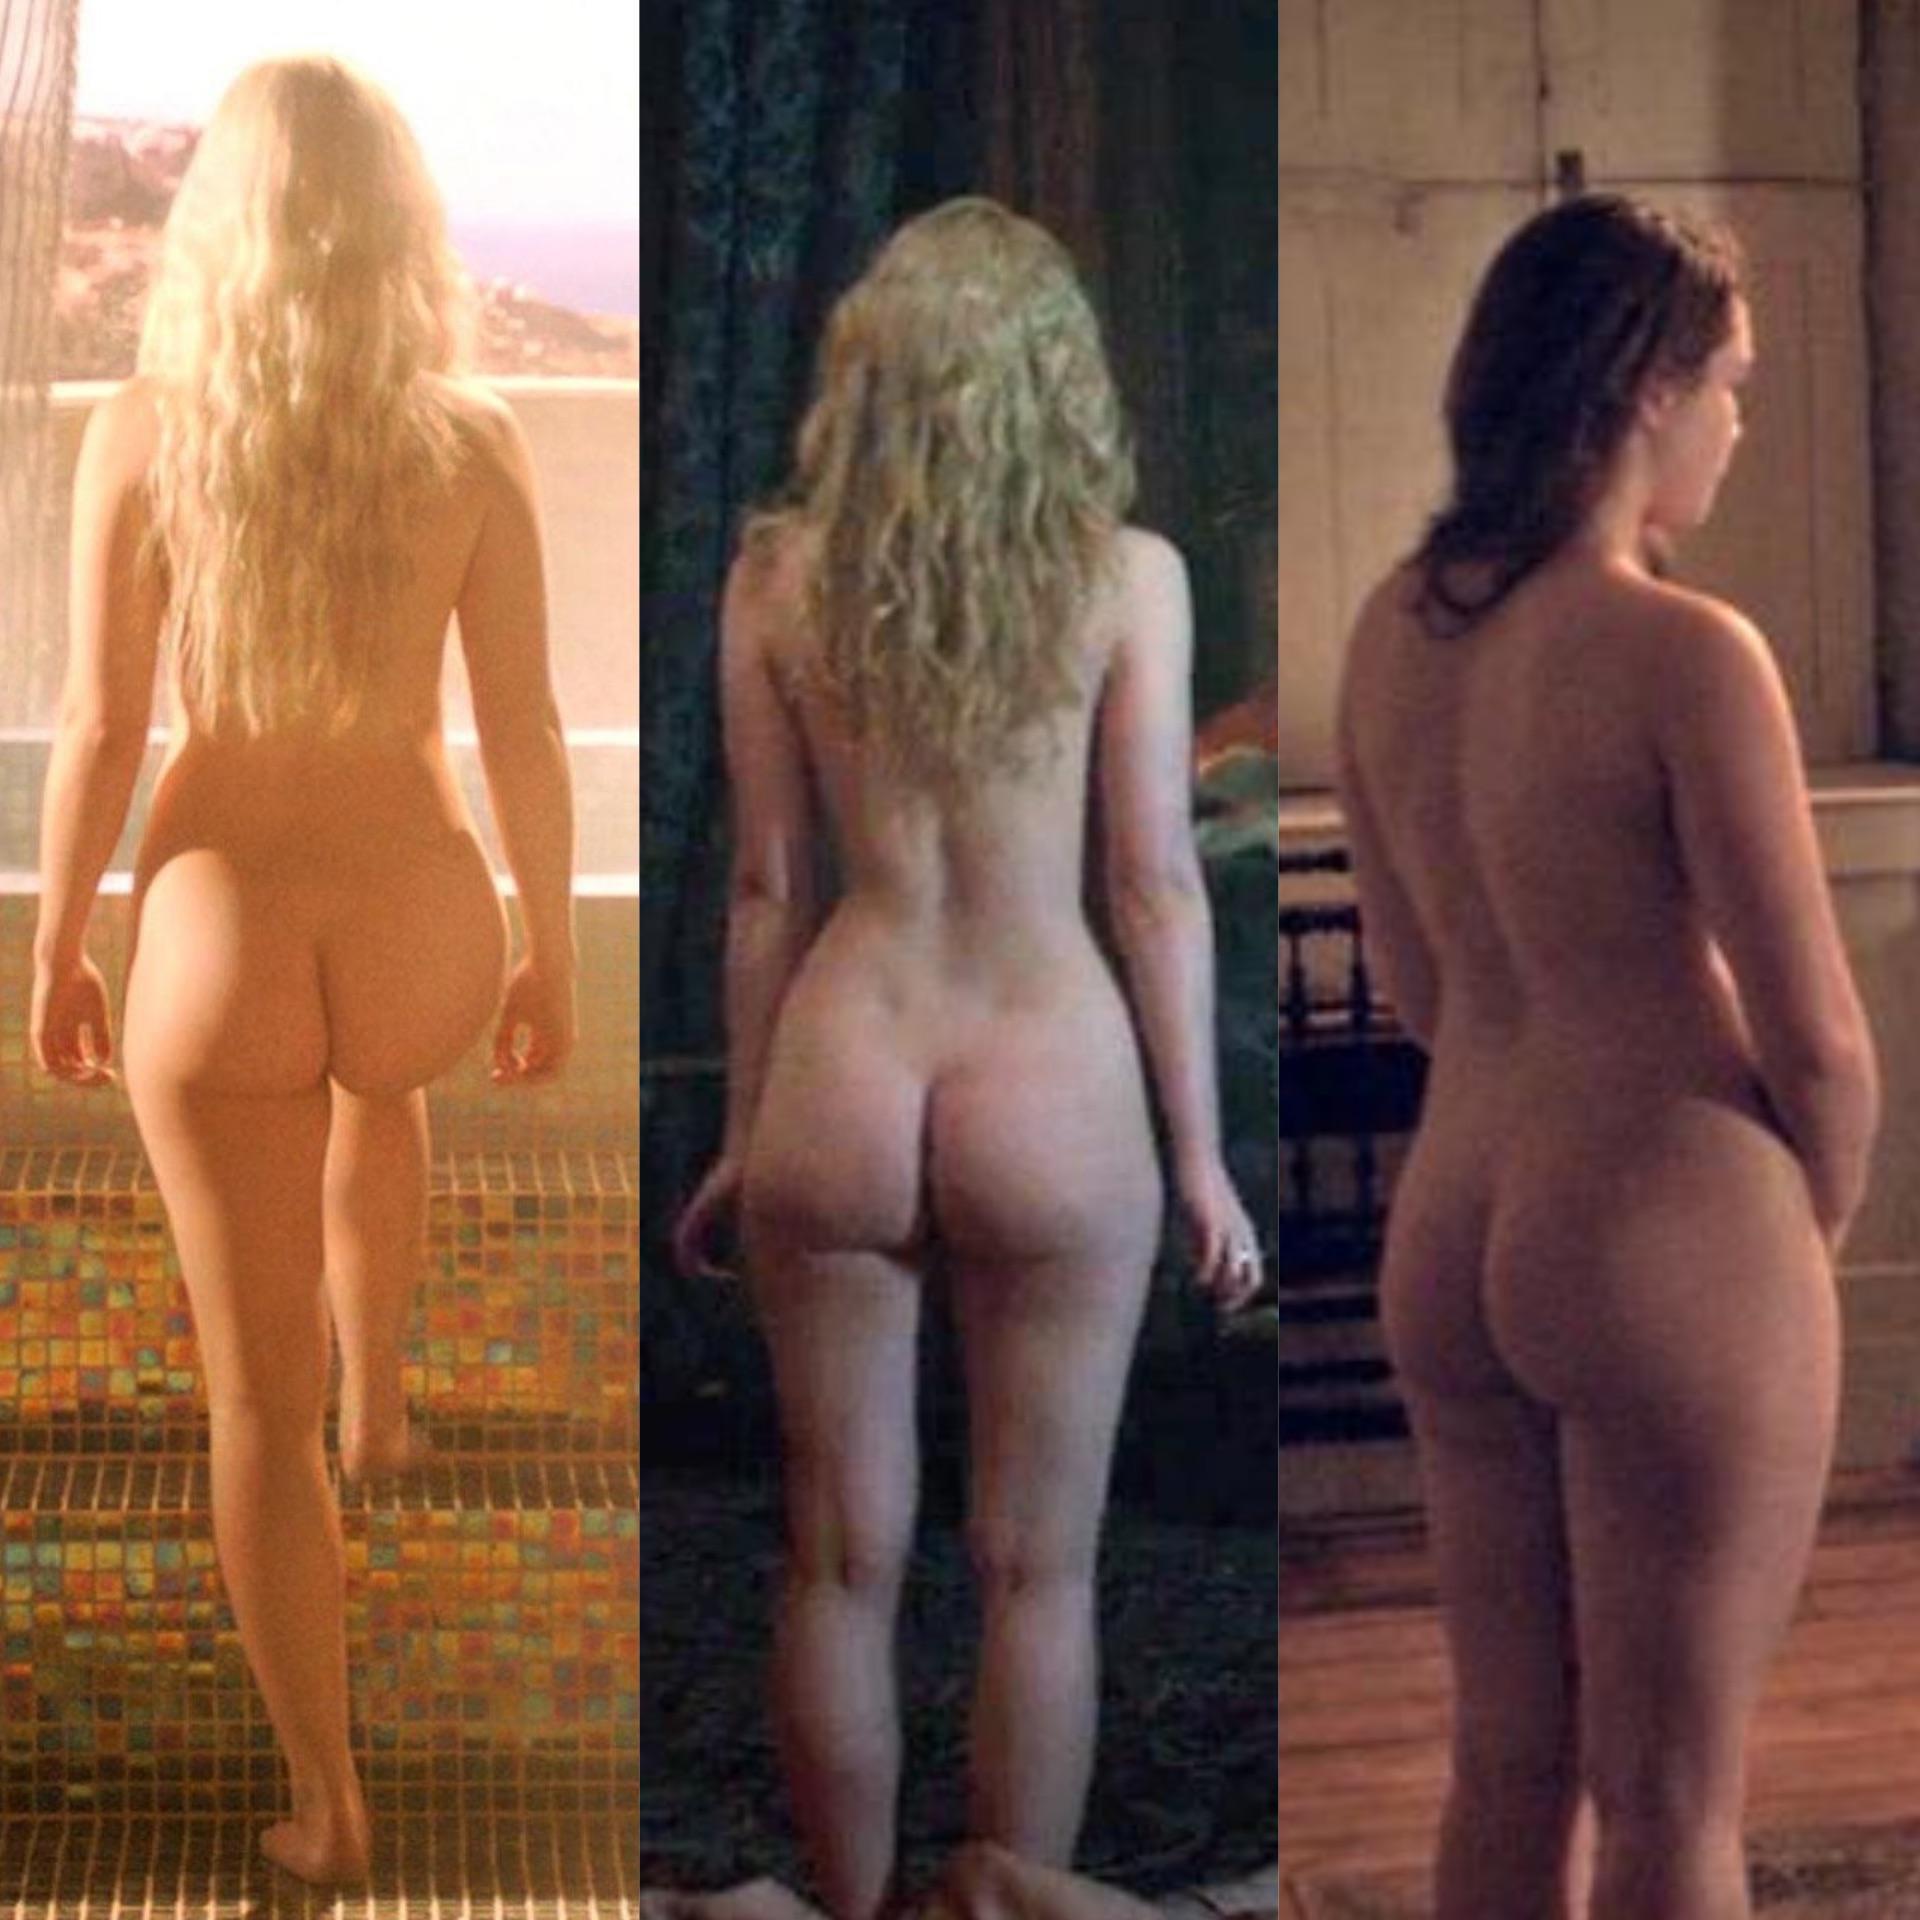 Emilia clarke leaked nudes - 🧡 Emilia Clarke Nude Photo and Video Collecti...